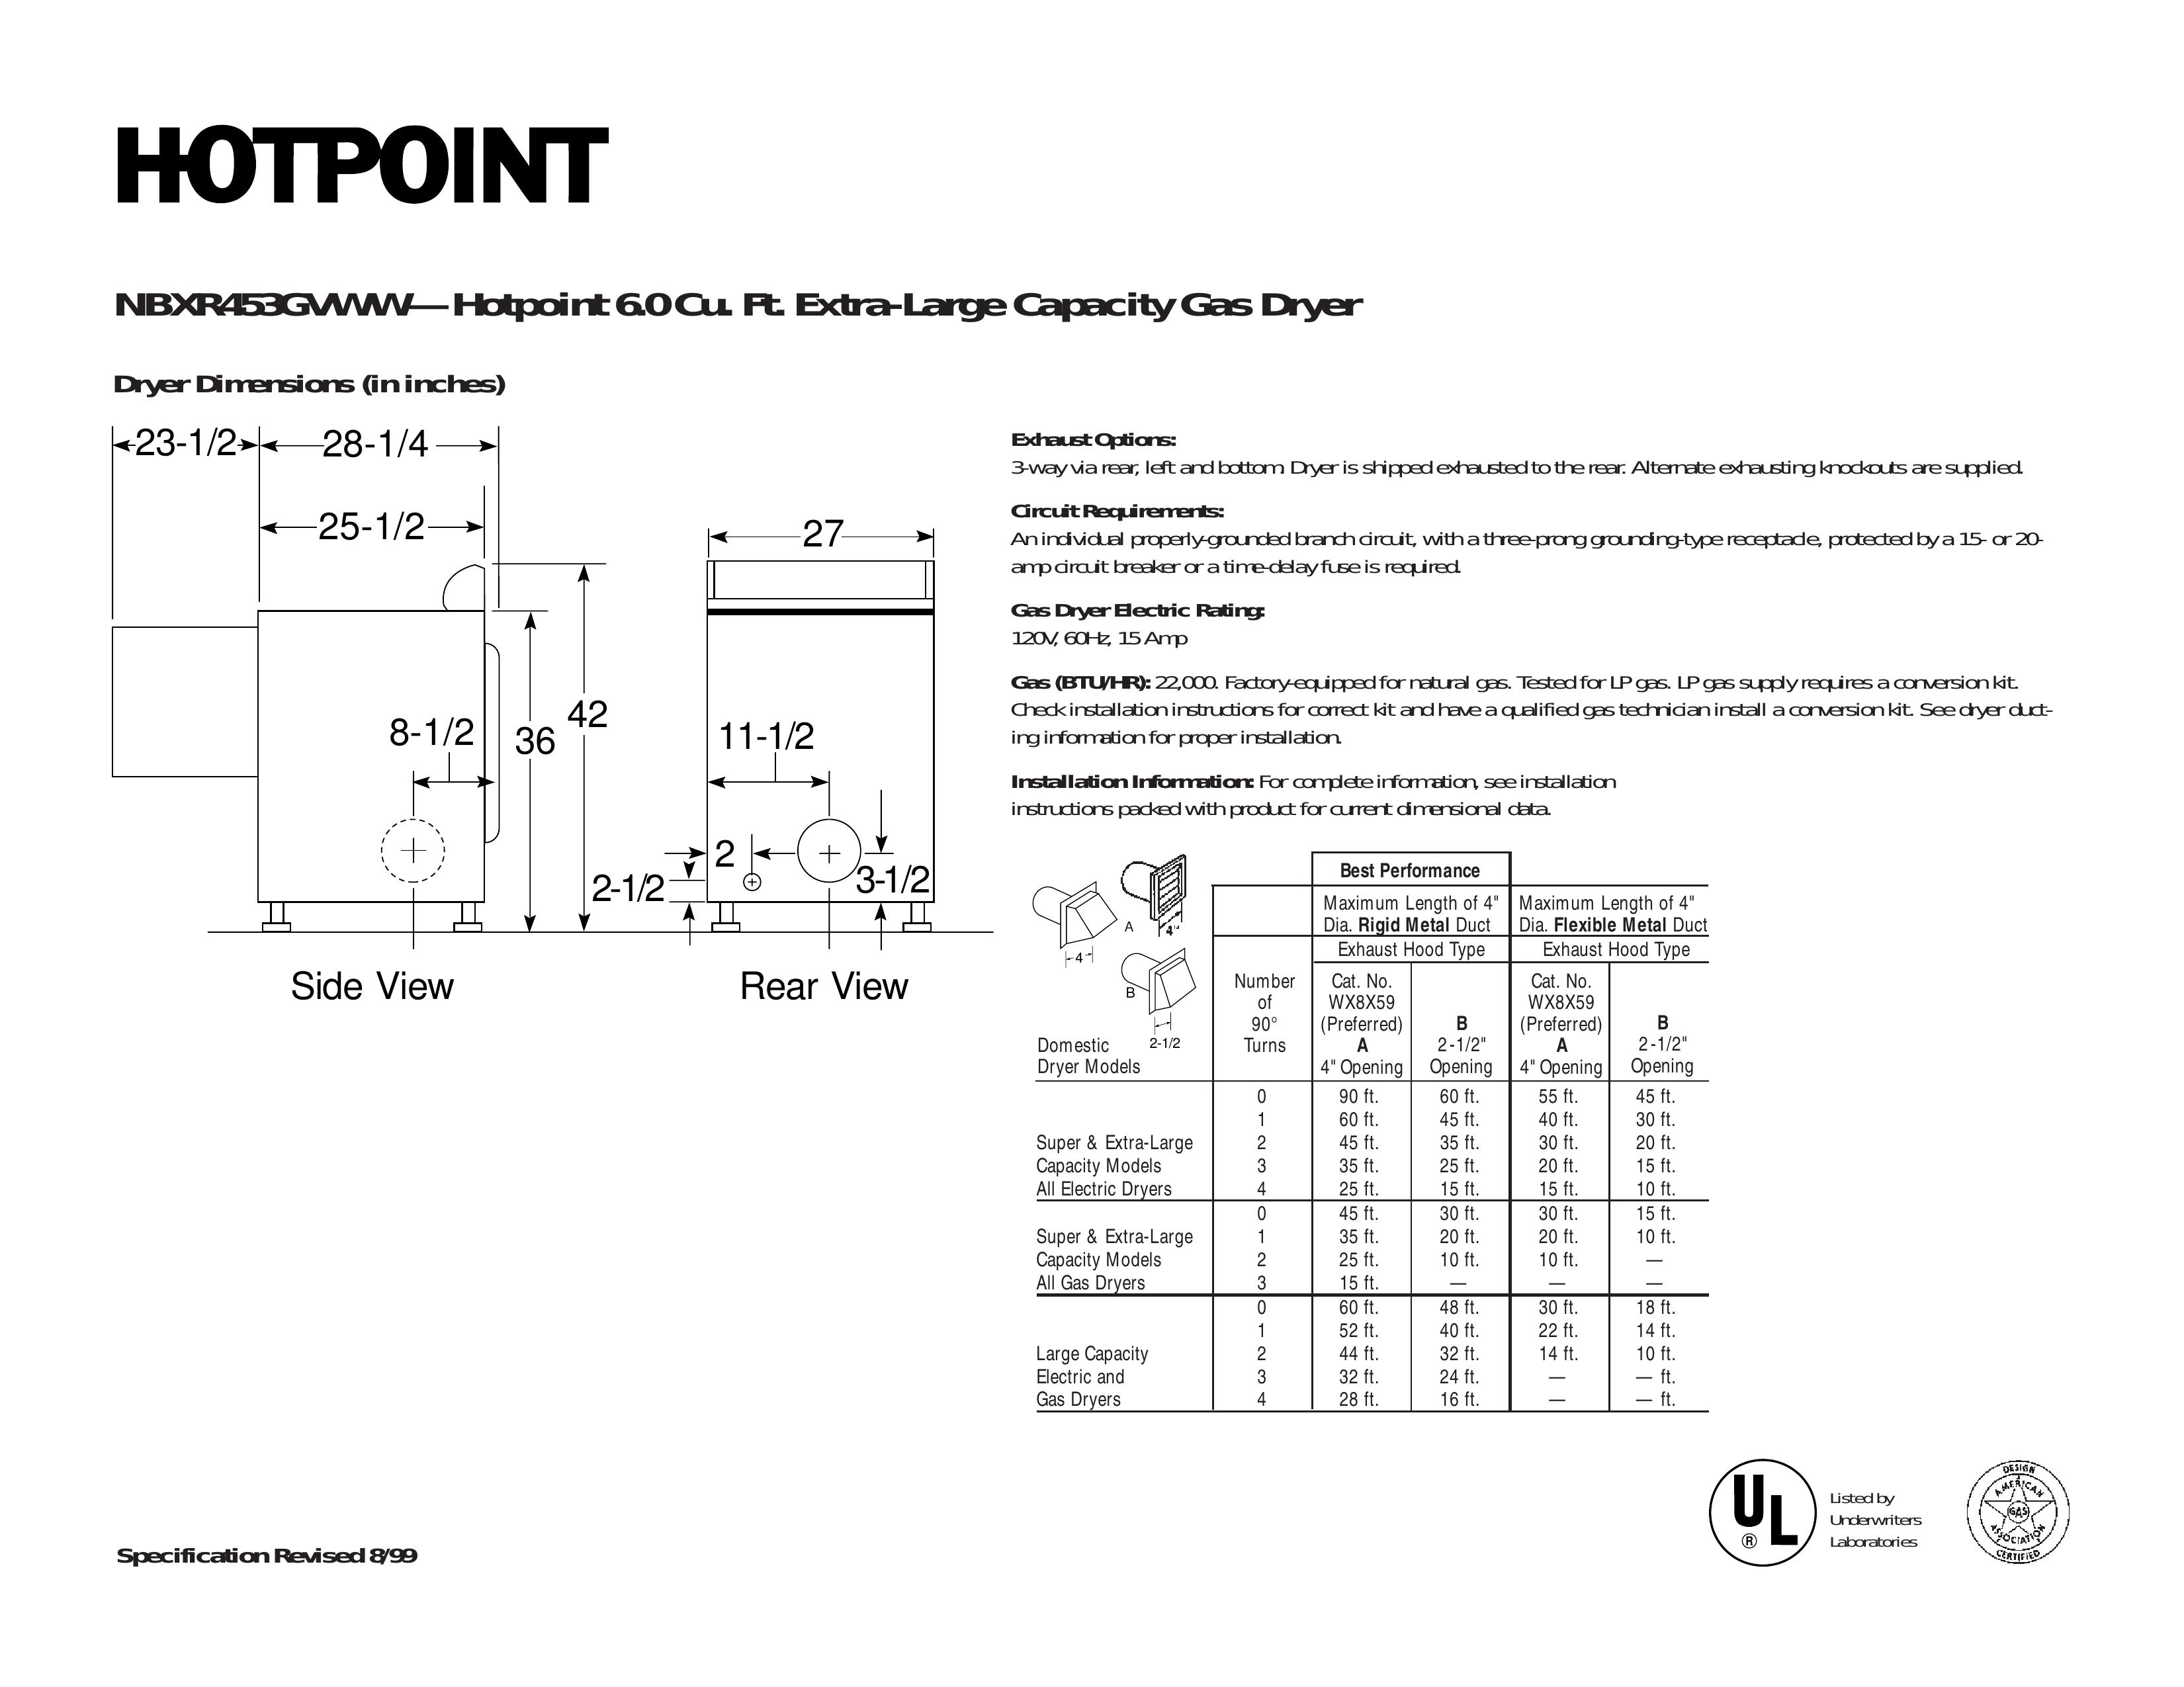 Hotpoint NBXR453EVWW Clothes Dryer User Manual